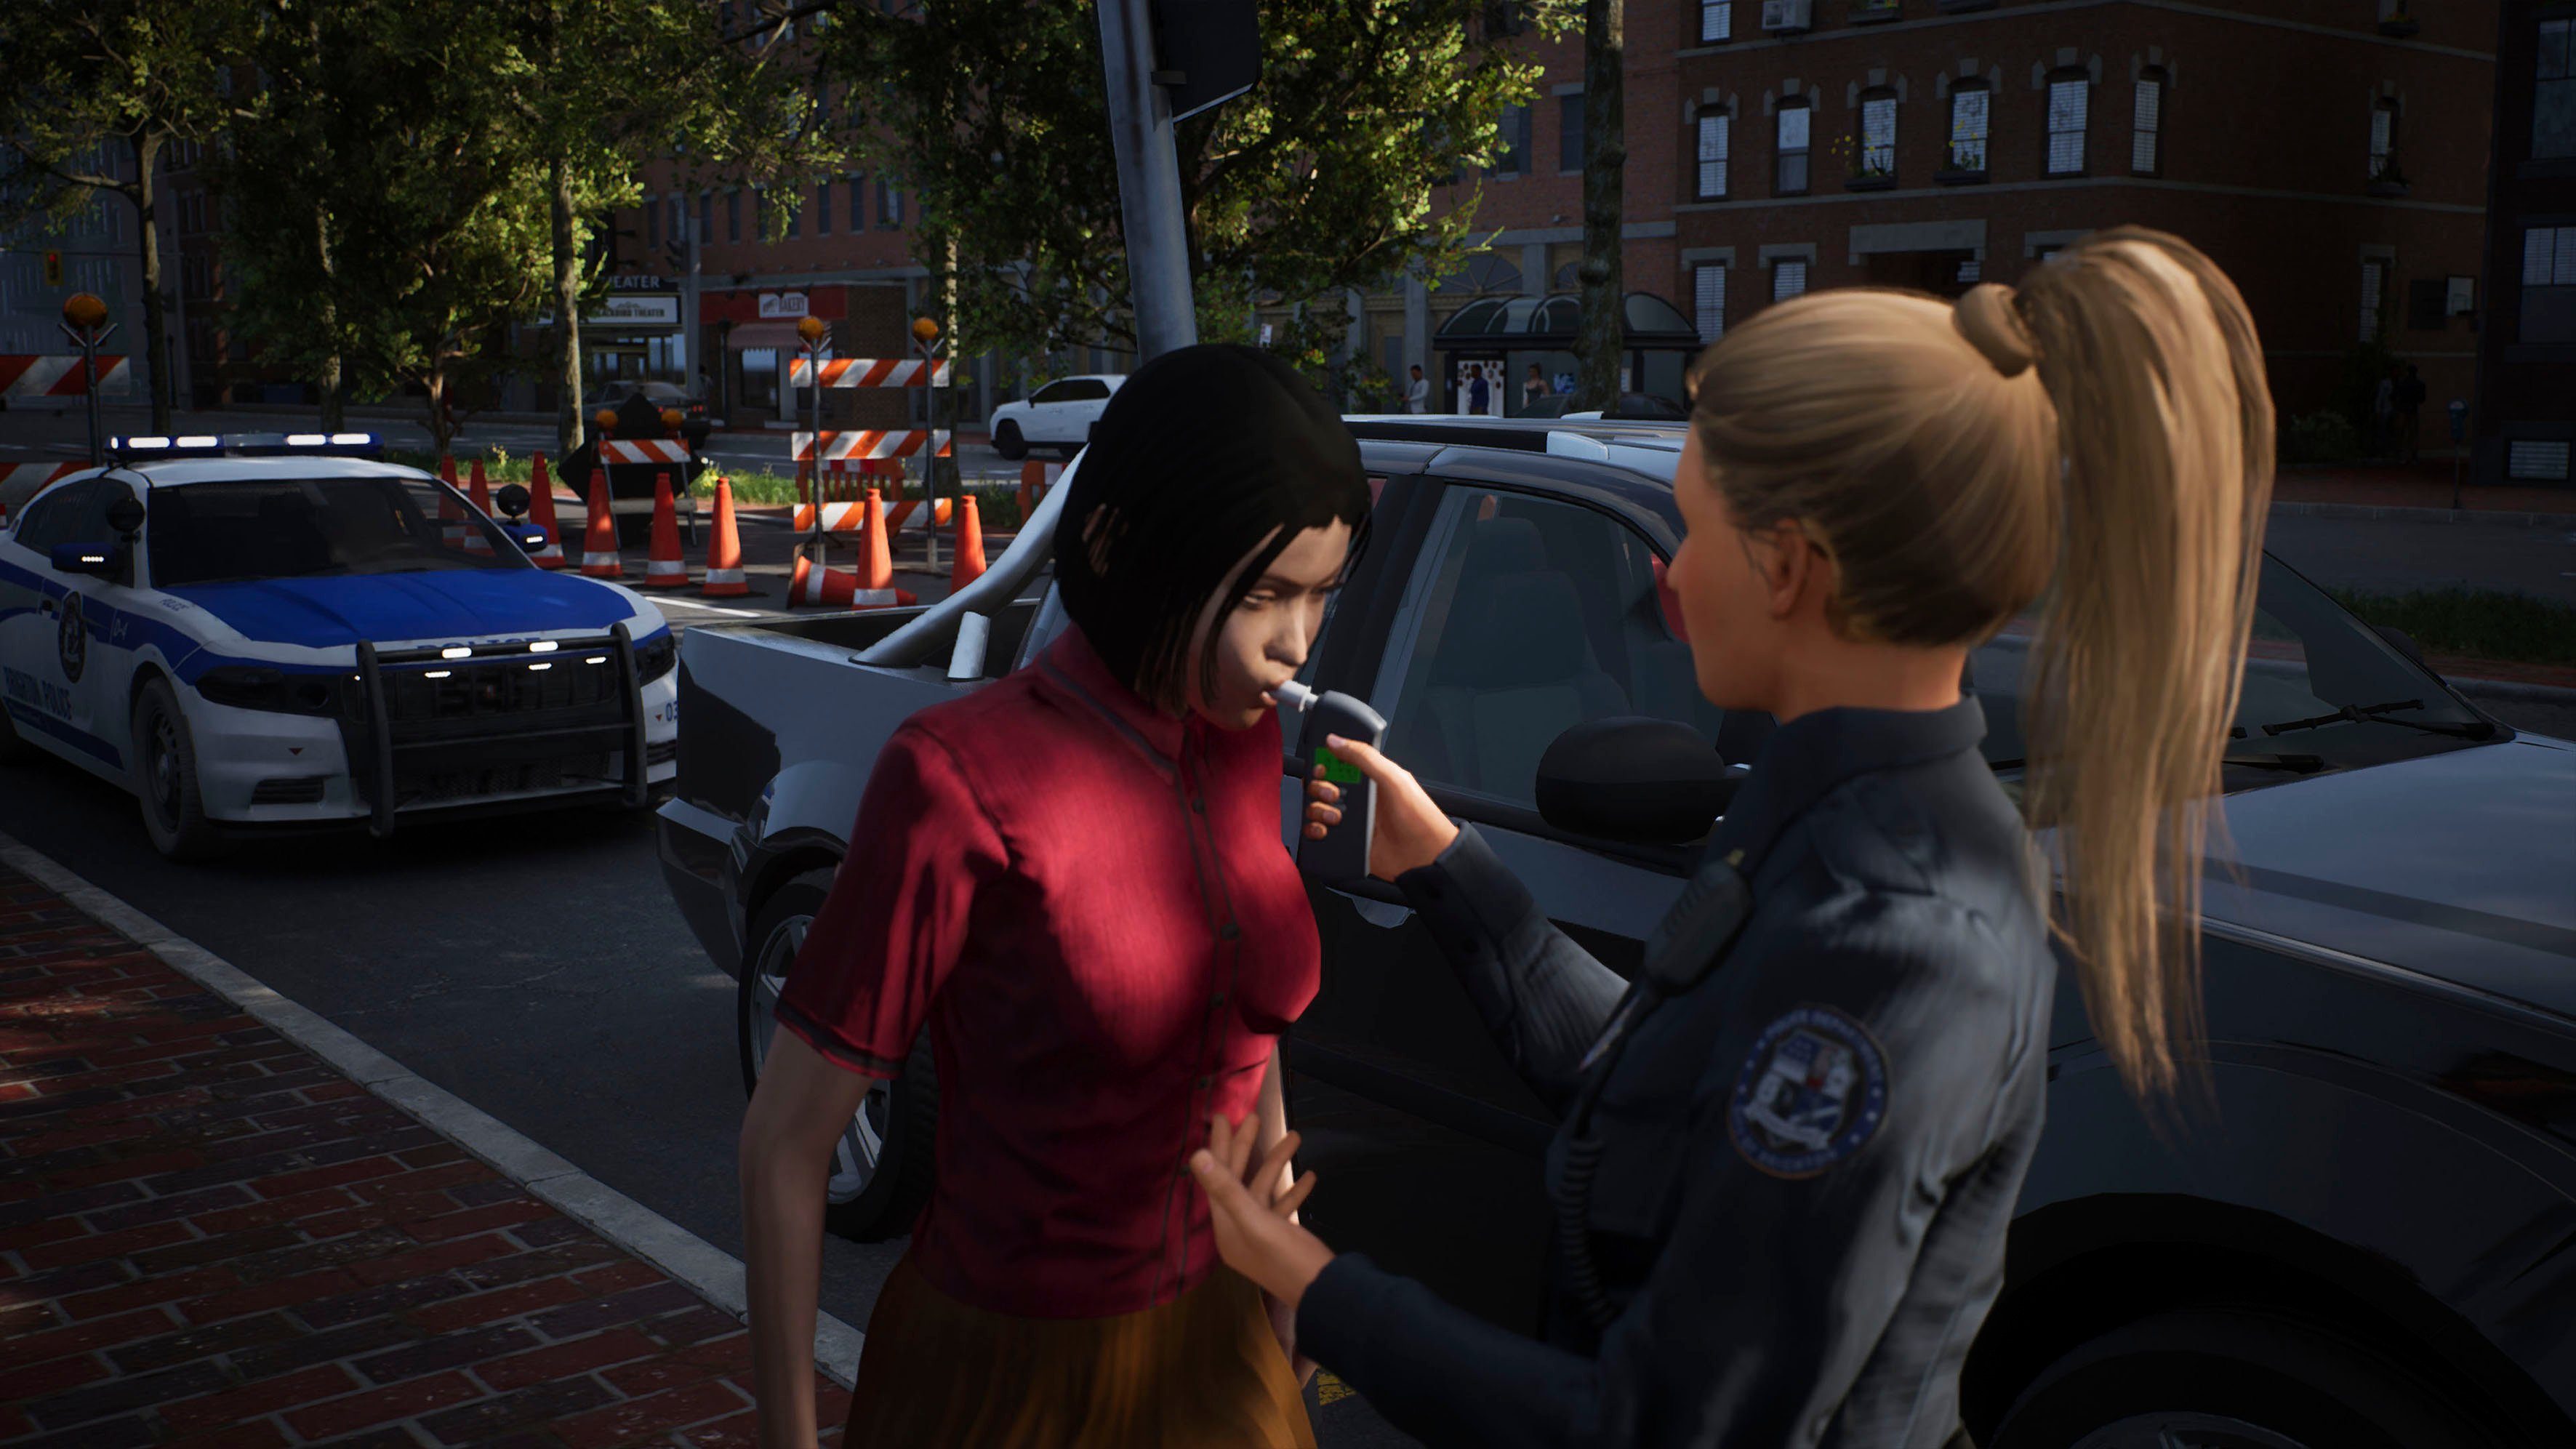 Patrol PlayStation 4 Astragon Police Officers Simulator: